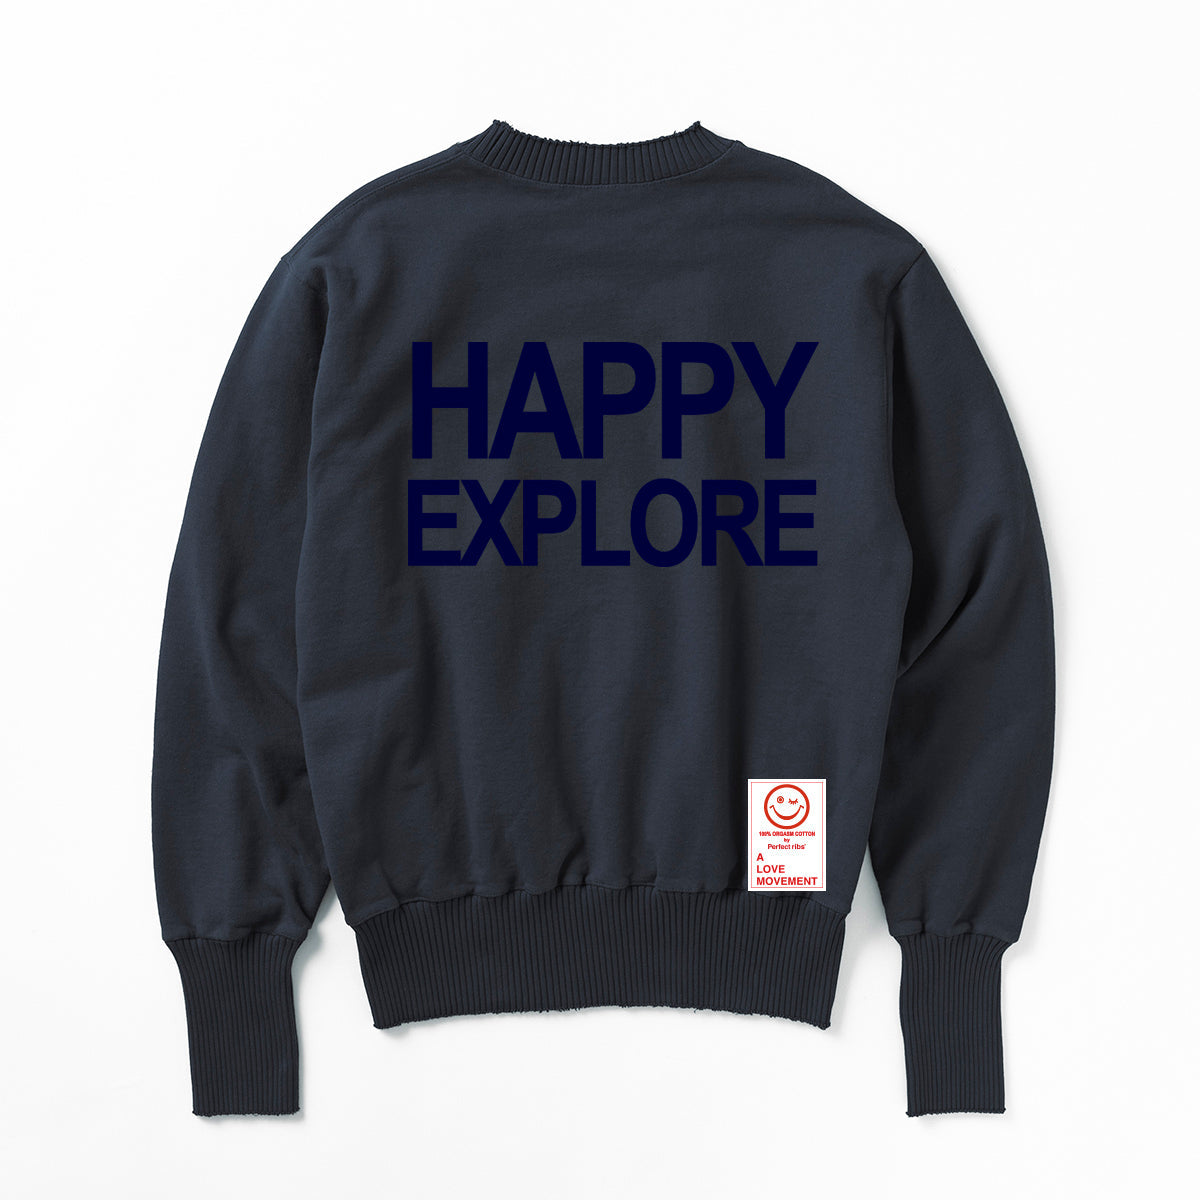 Exclusive Color【Perfect ribs®︎×A LOVE MOVEMENT】"HAPPY EXPLORE" Basic Crew Neck Sweat Shirt / Vintage Black×Ink Blue